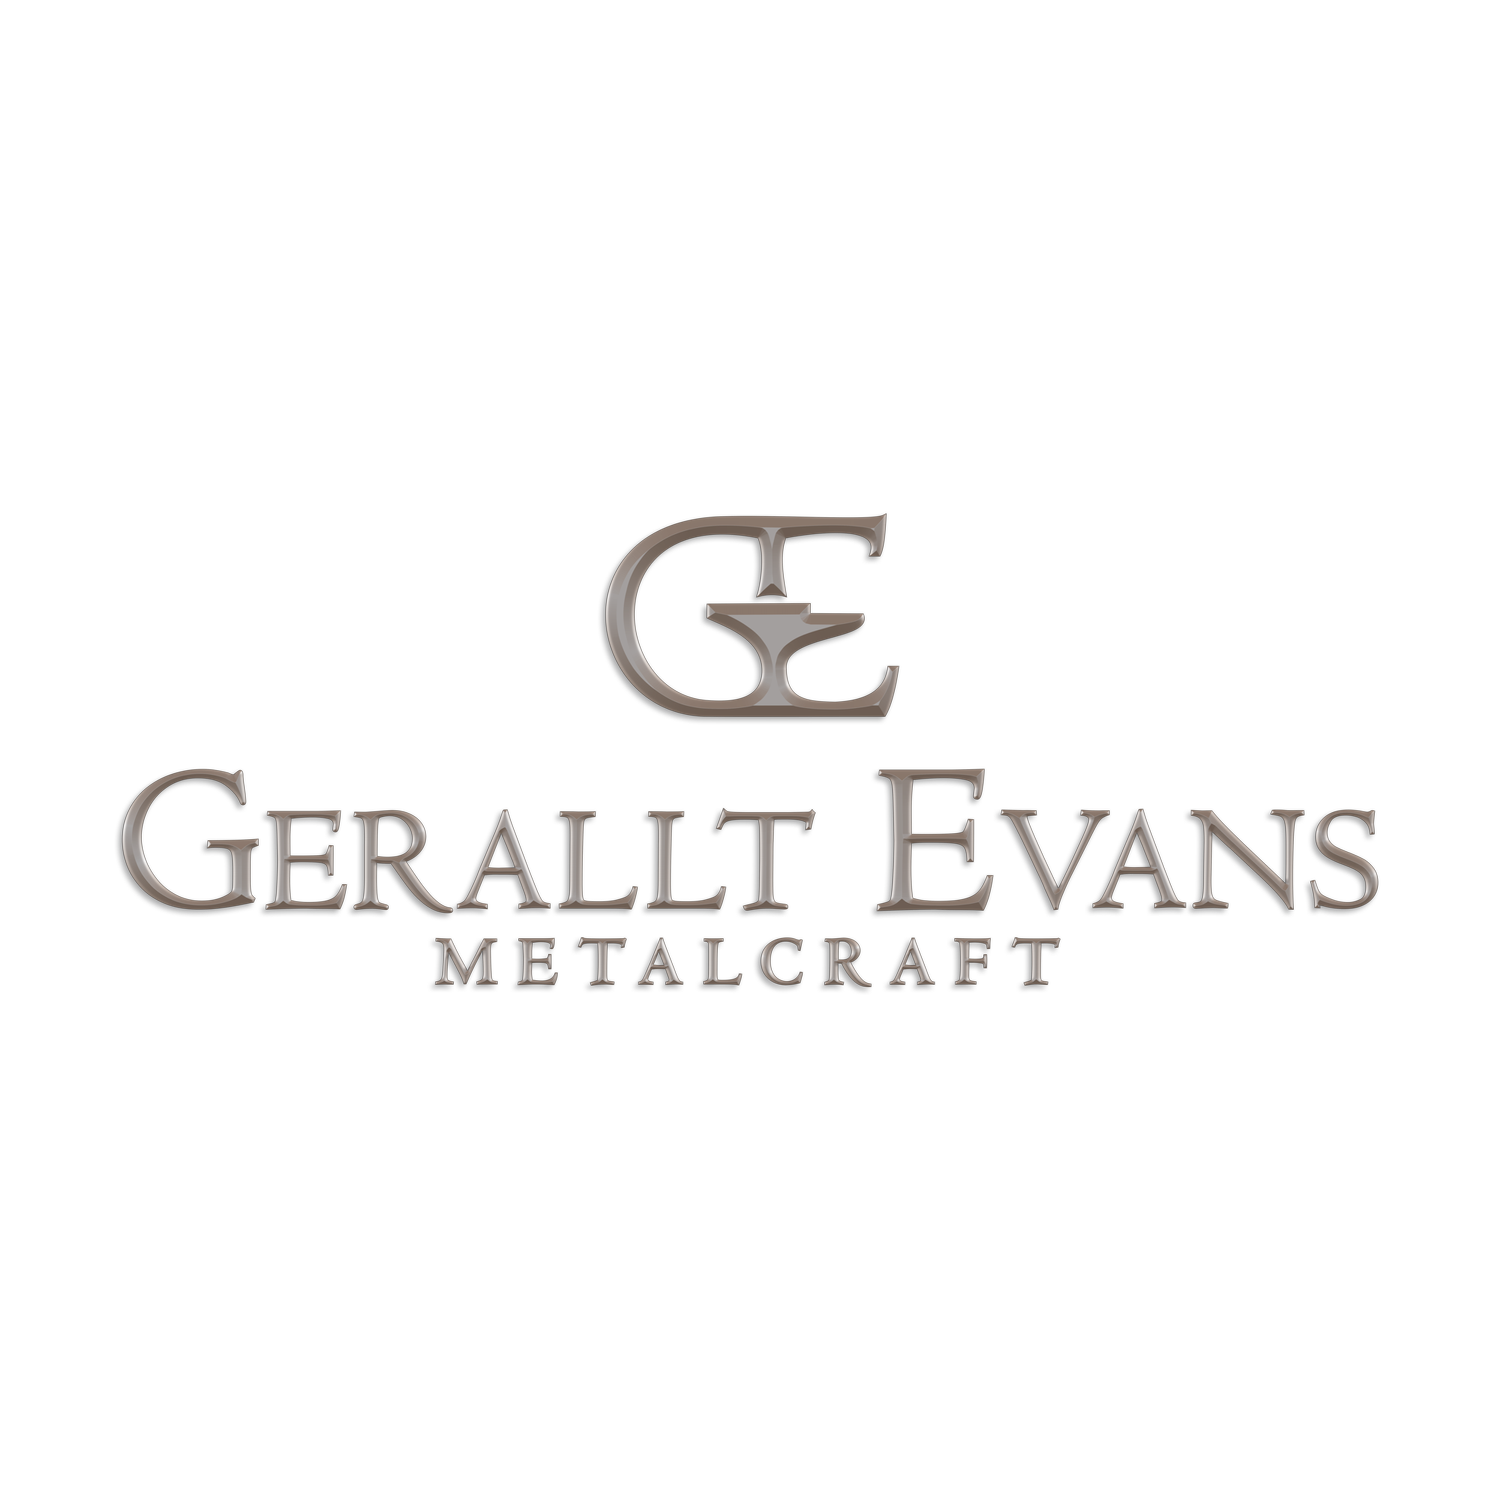 Gerallt Evans Metalcraft